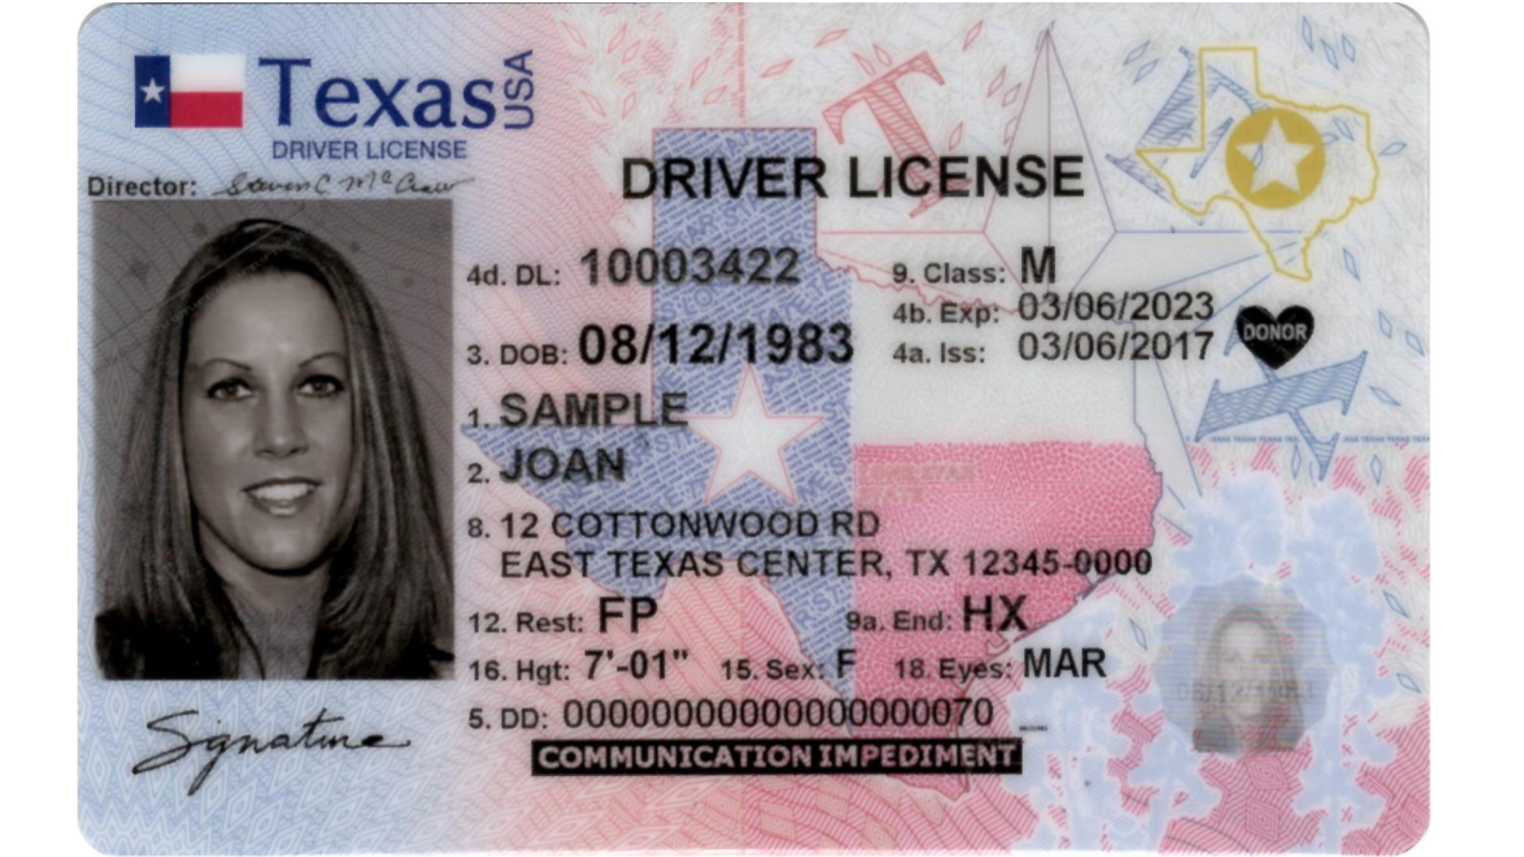 Ids license. Texas Driver License.